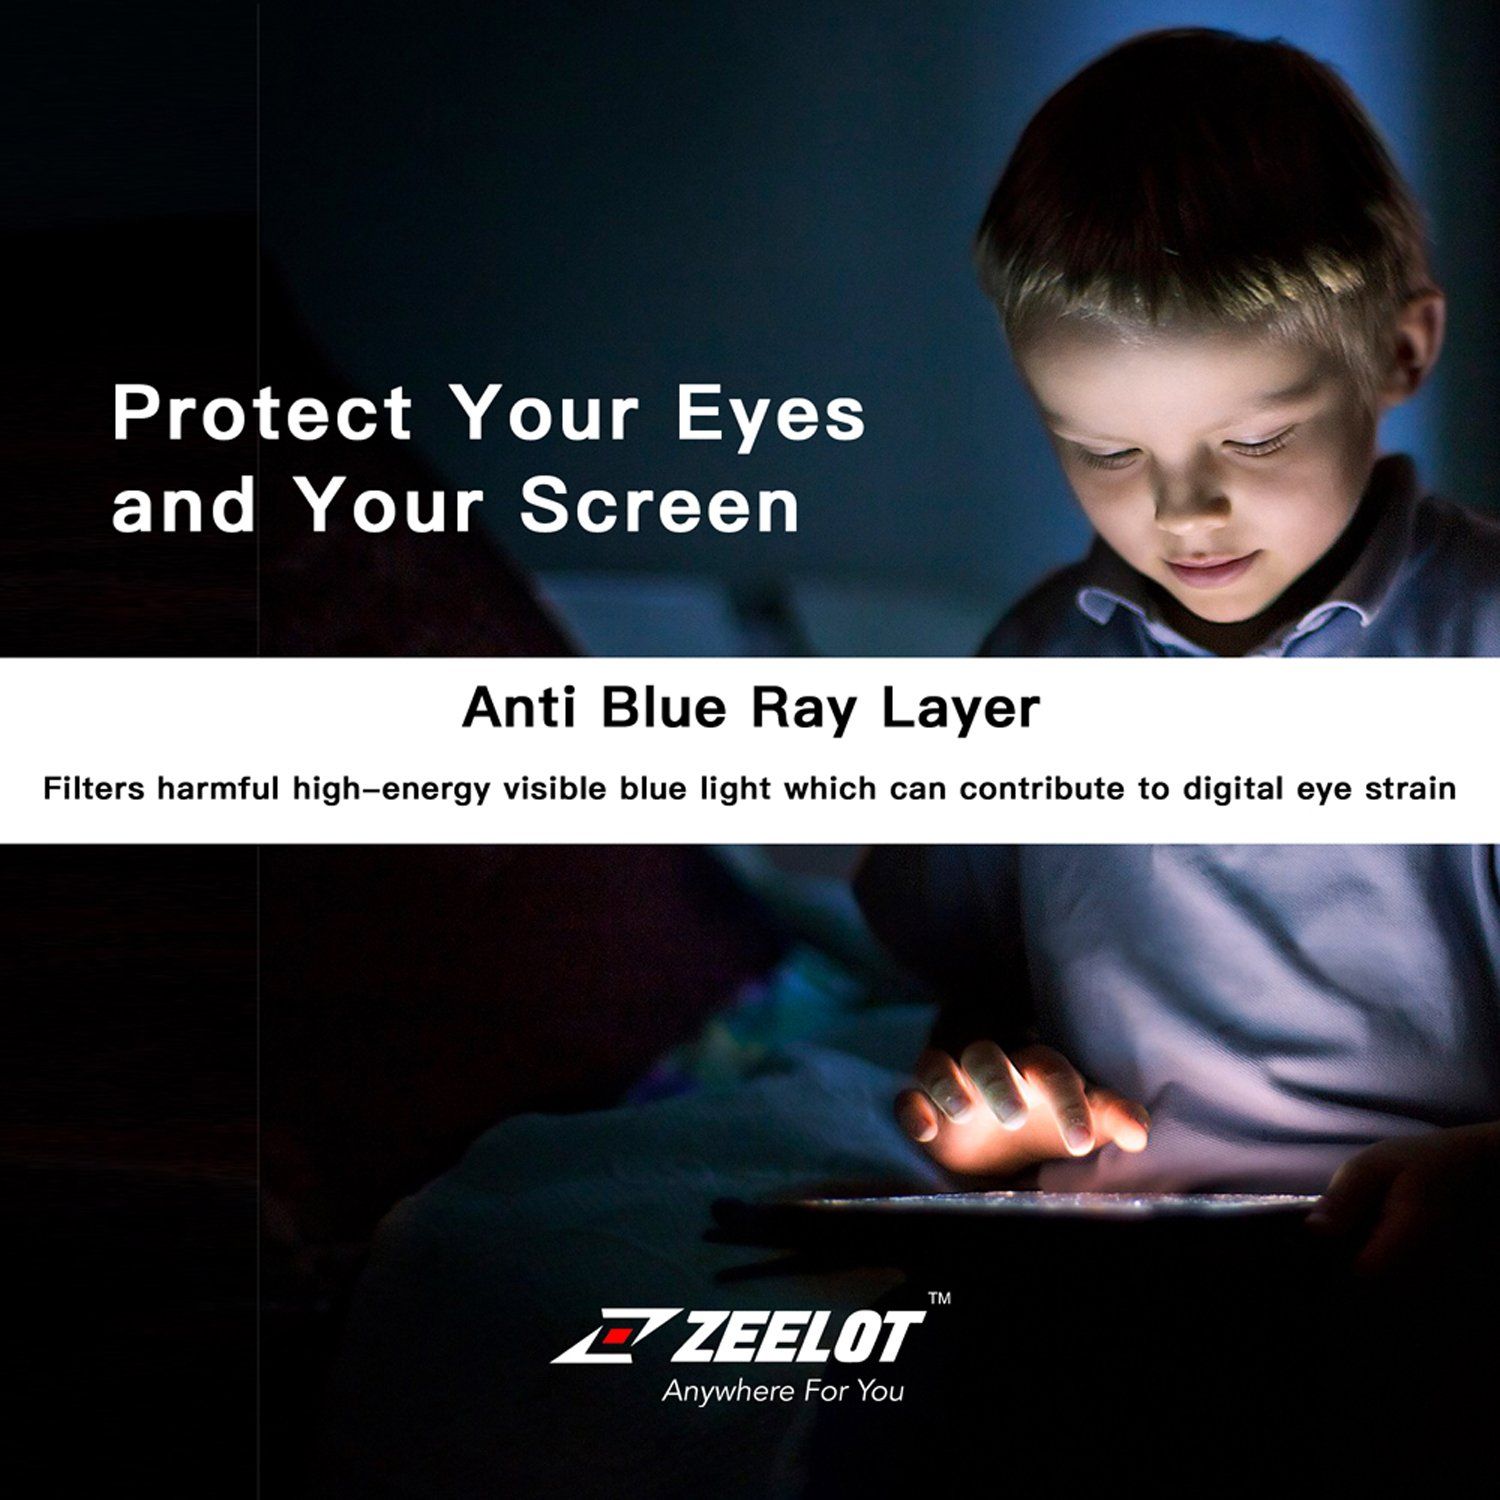 ZEELOT PureGlass 2.5D Anti Blue Ray Corning Tempered Glass Screen Protector for iPad 9.7"(2018-2013) Default Zeelot 